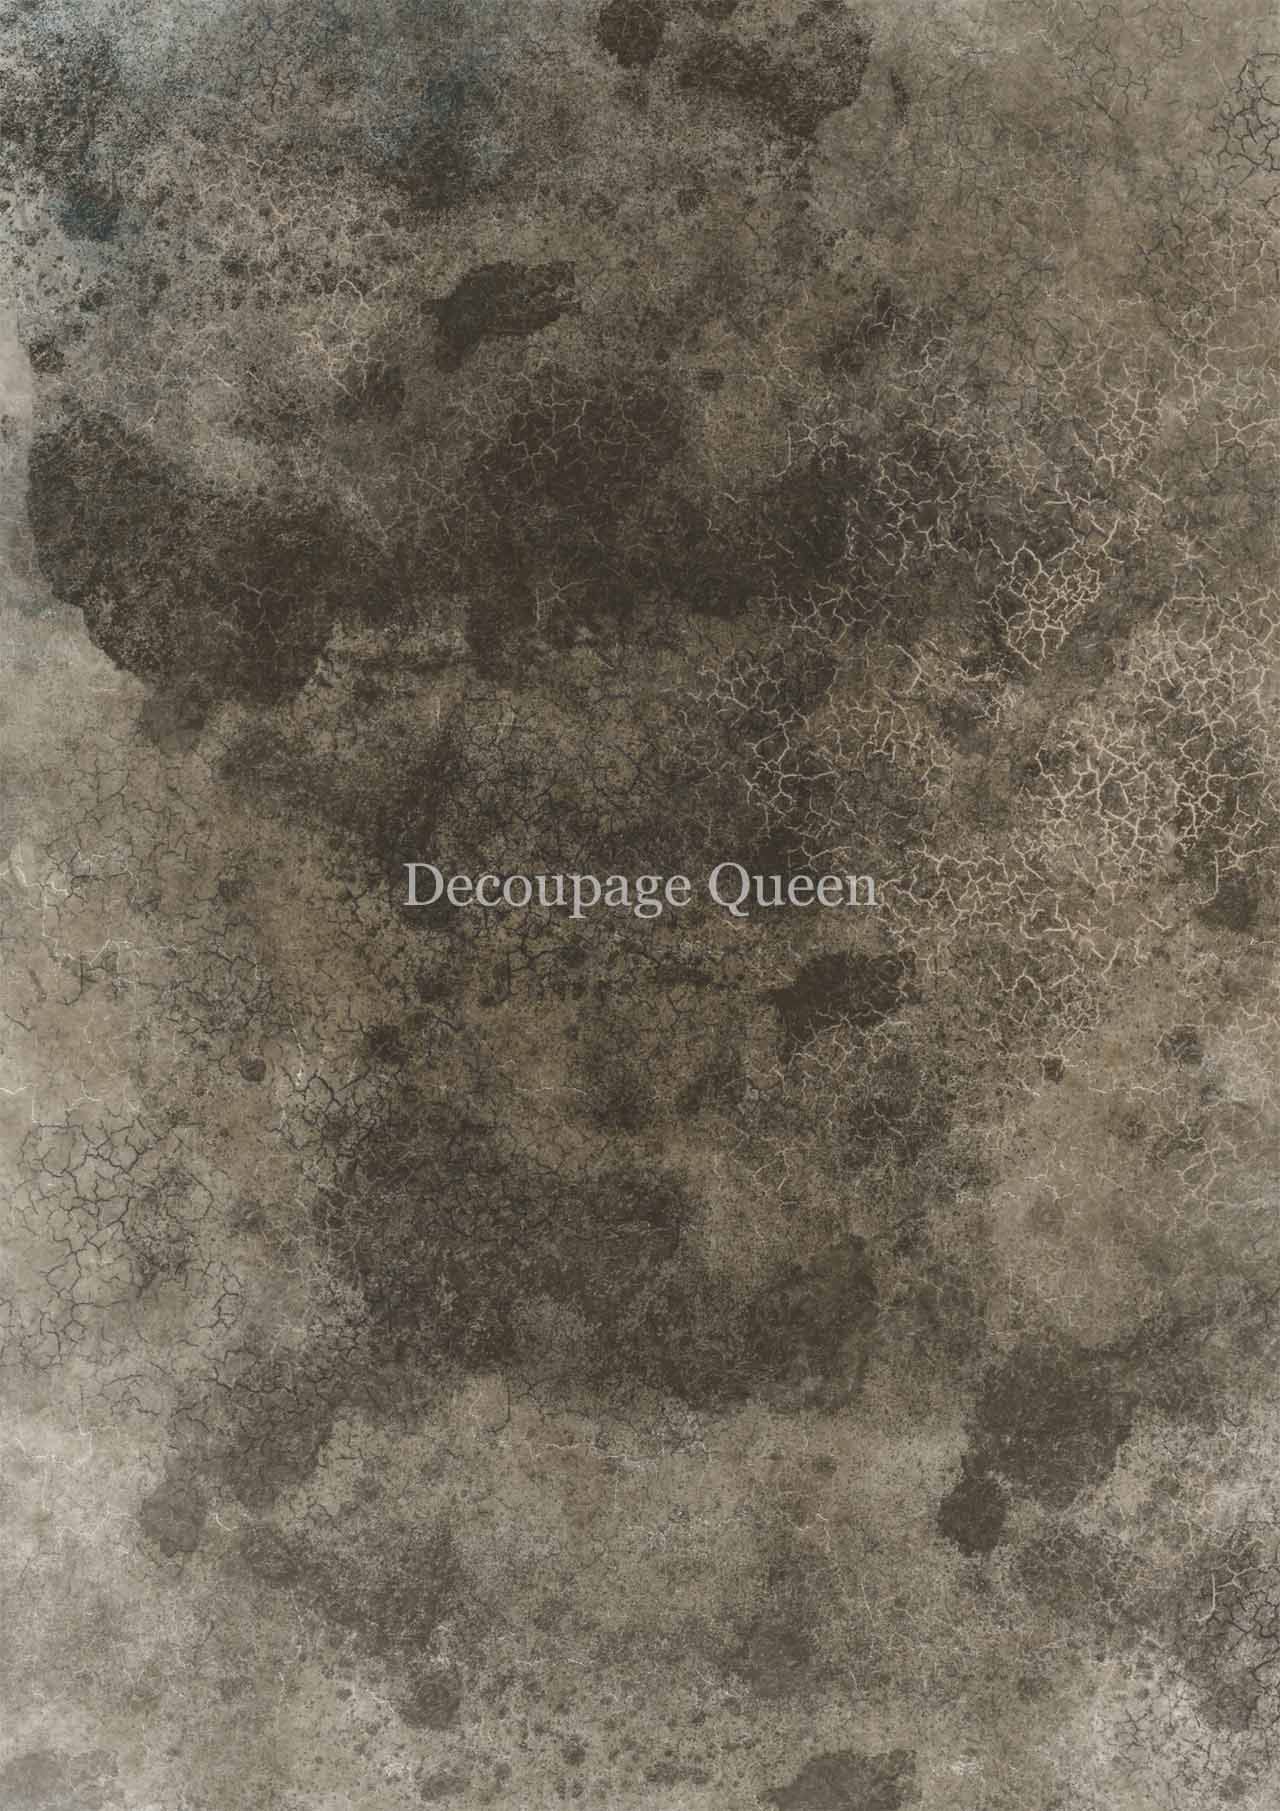 Decoupage Queen Dainty & The Queen Antique Grunge #0285